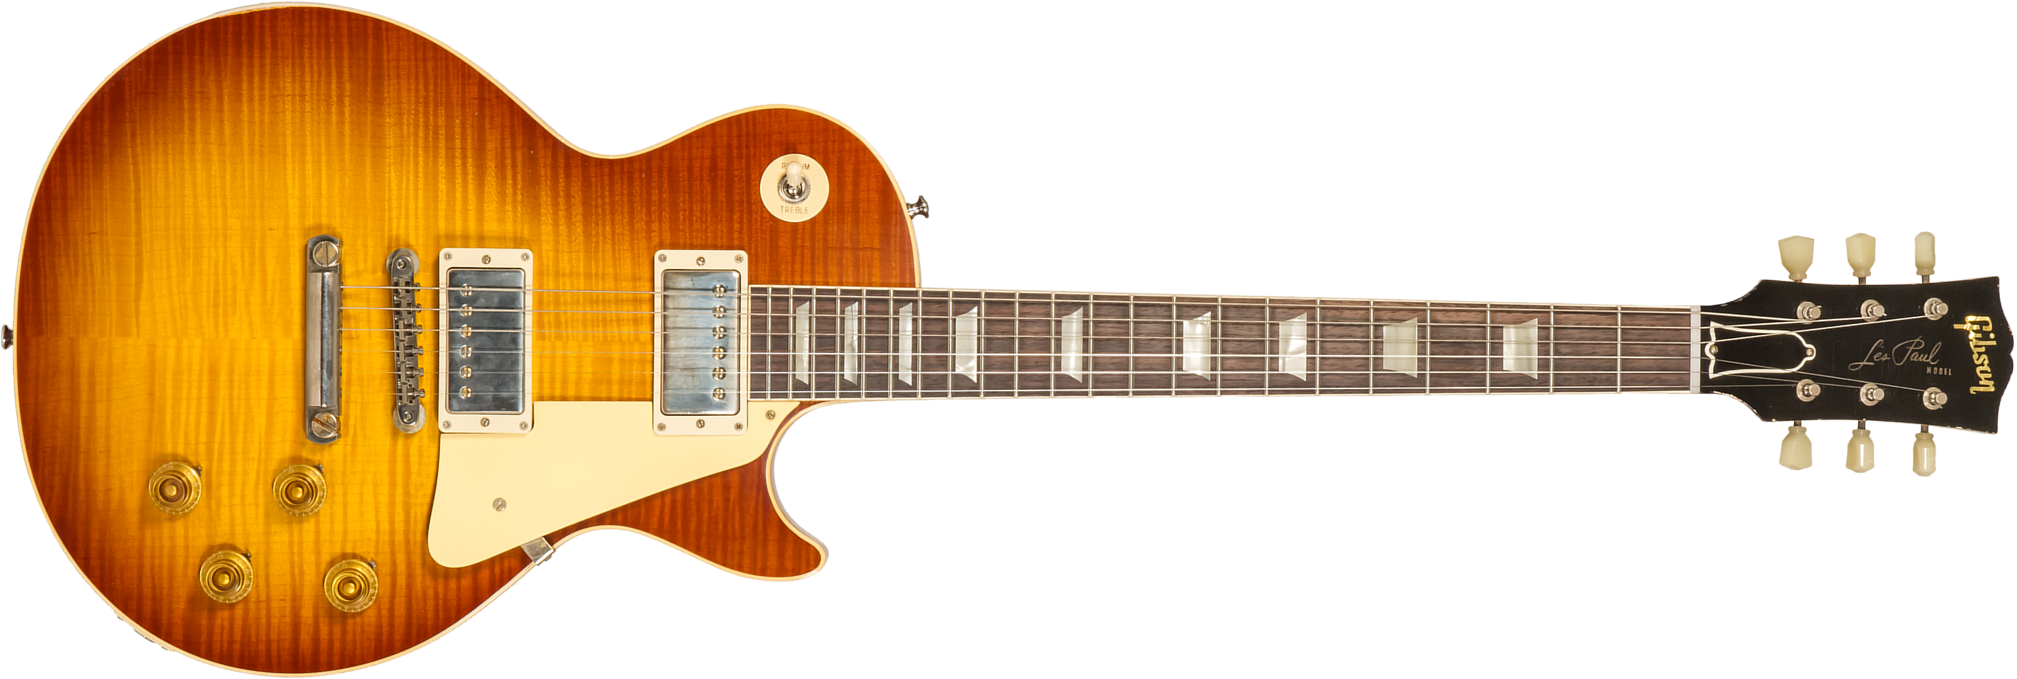 Gibson Custom Shop M2m Les Paul Standard 1959 Reissue 2h Ht Rw #934285 - Murphy Lab Light Aged Ice Tea Burst - Single cut electric guitar - Main pictu